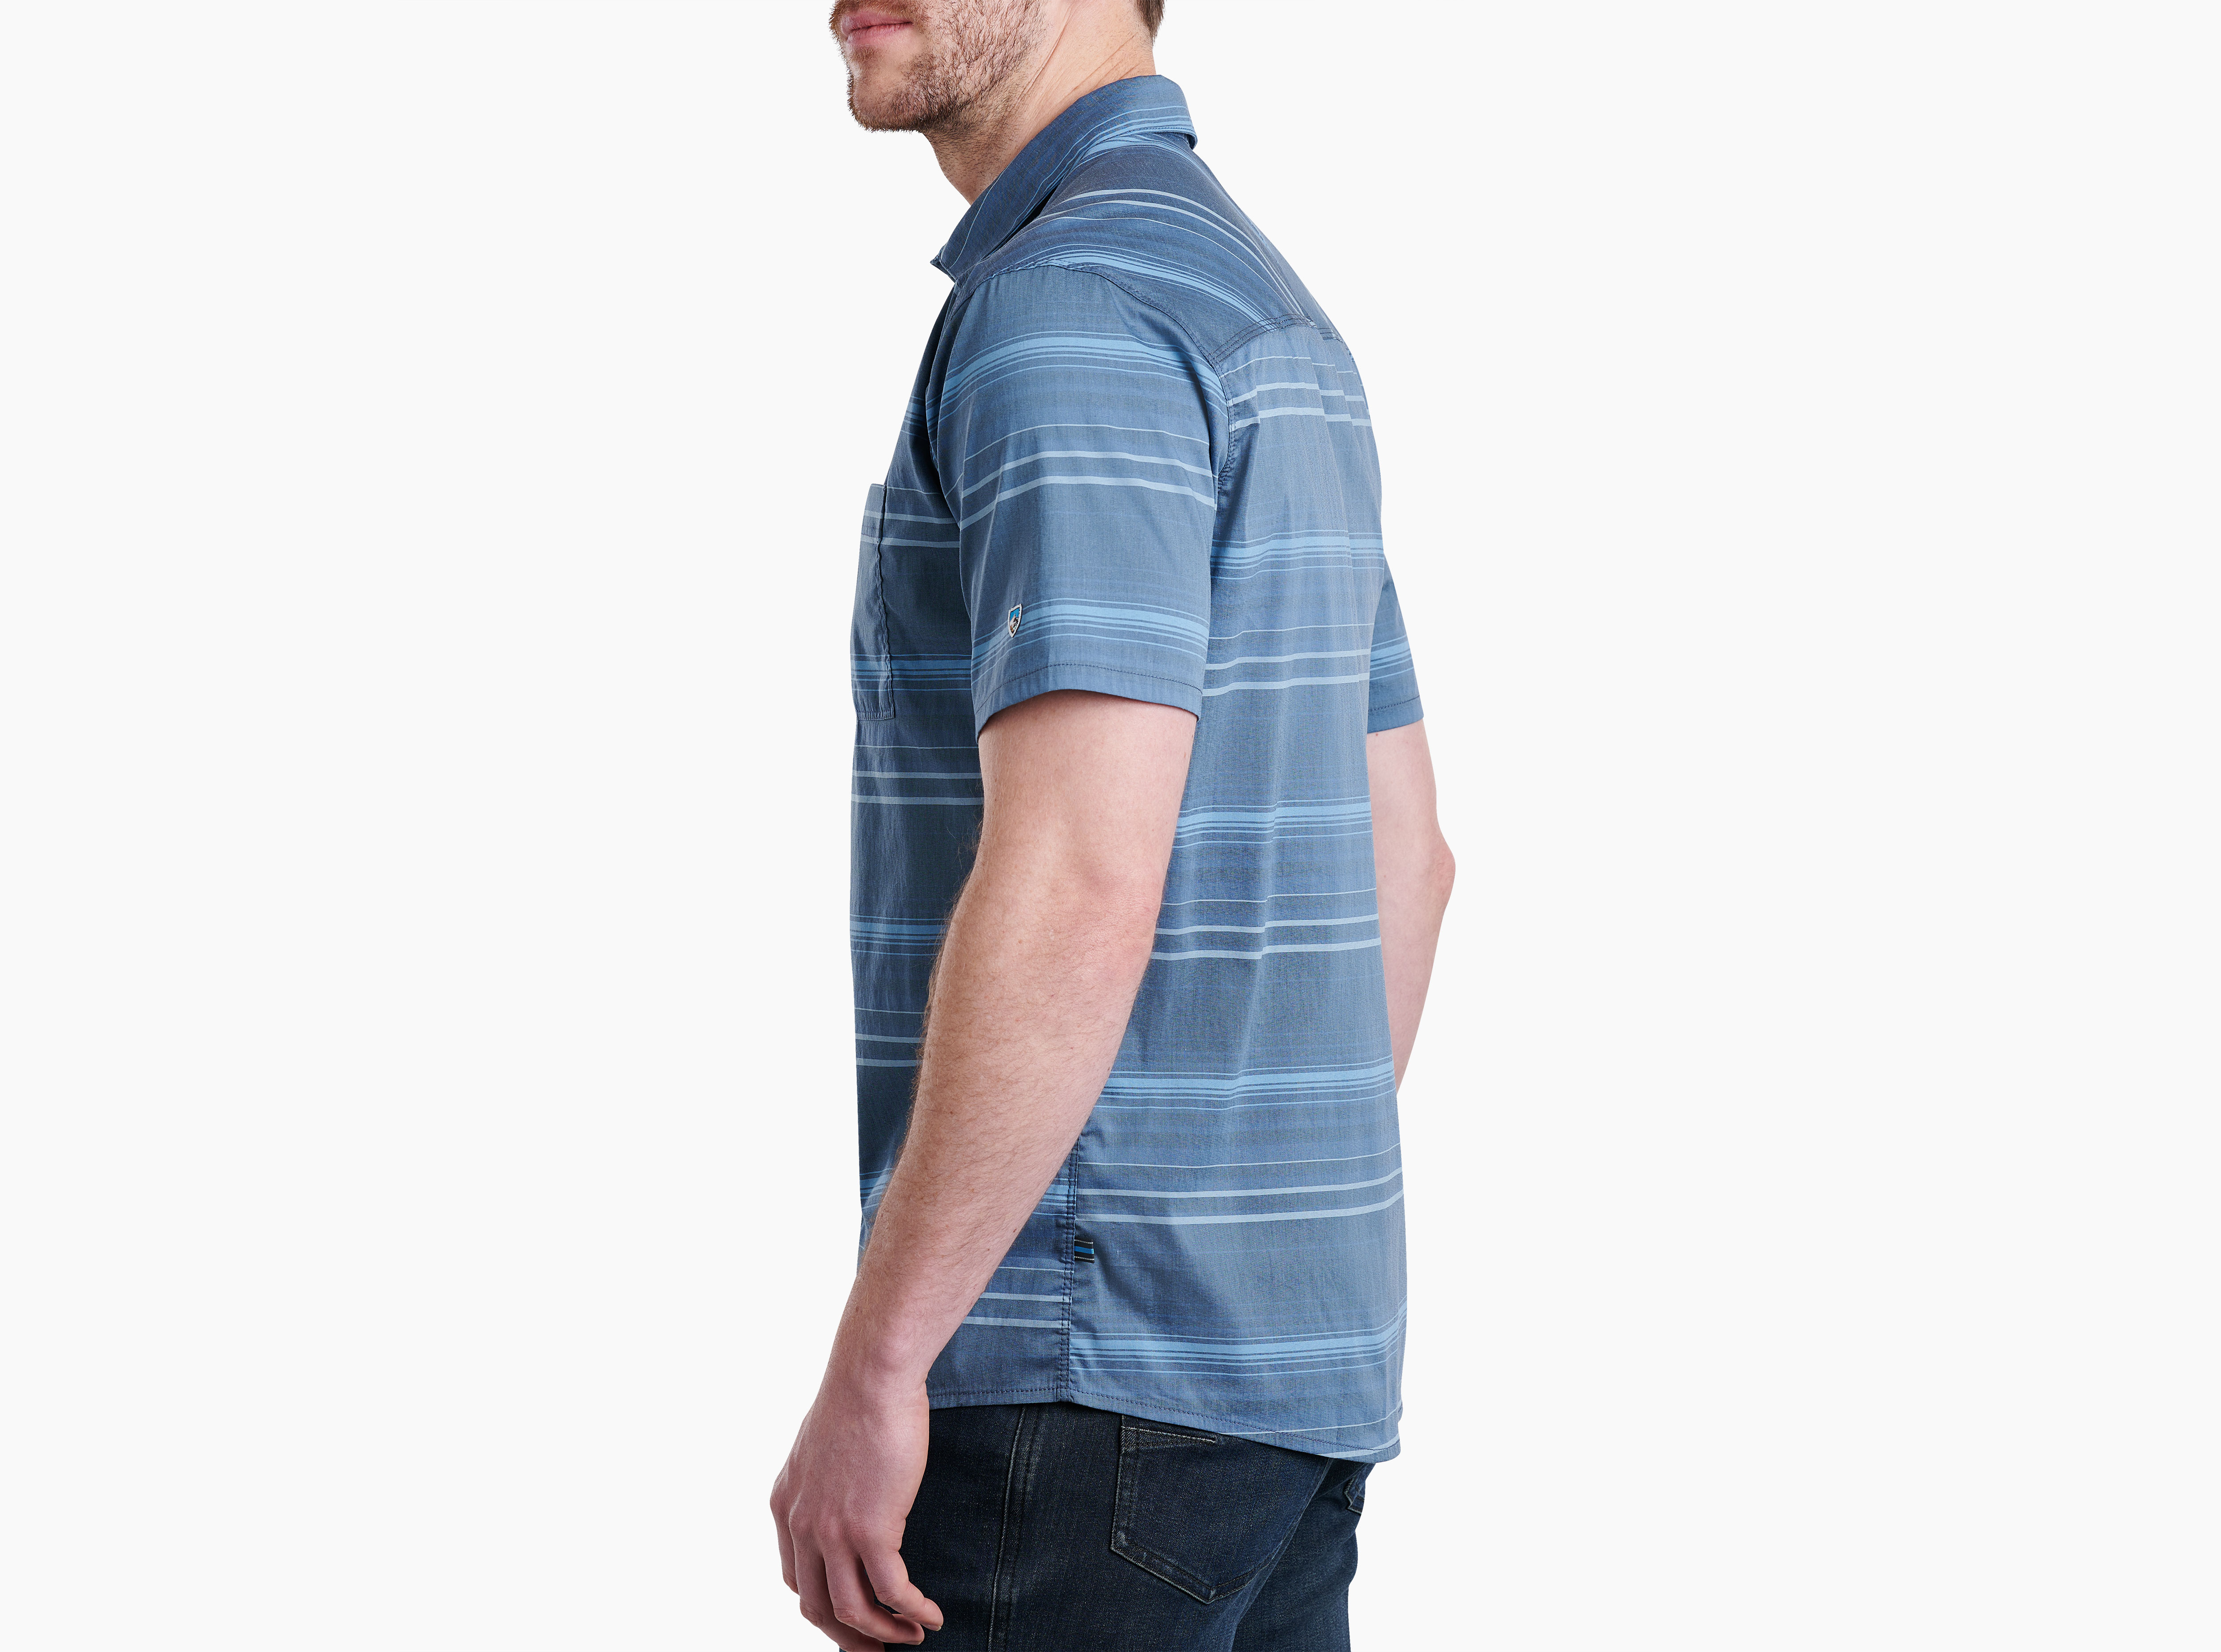 KÜHL RESPONSE™ Men's SS Shirt, Style #7452